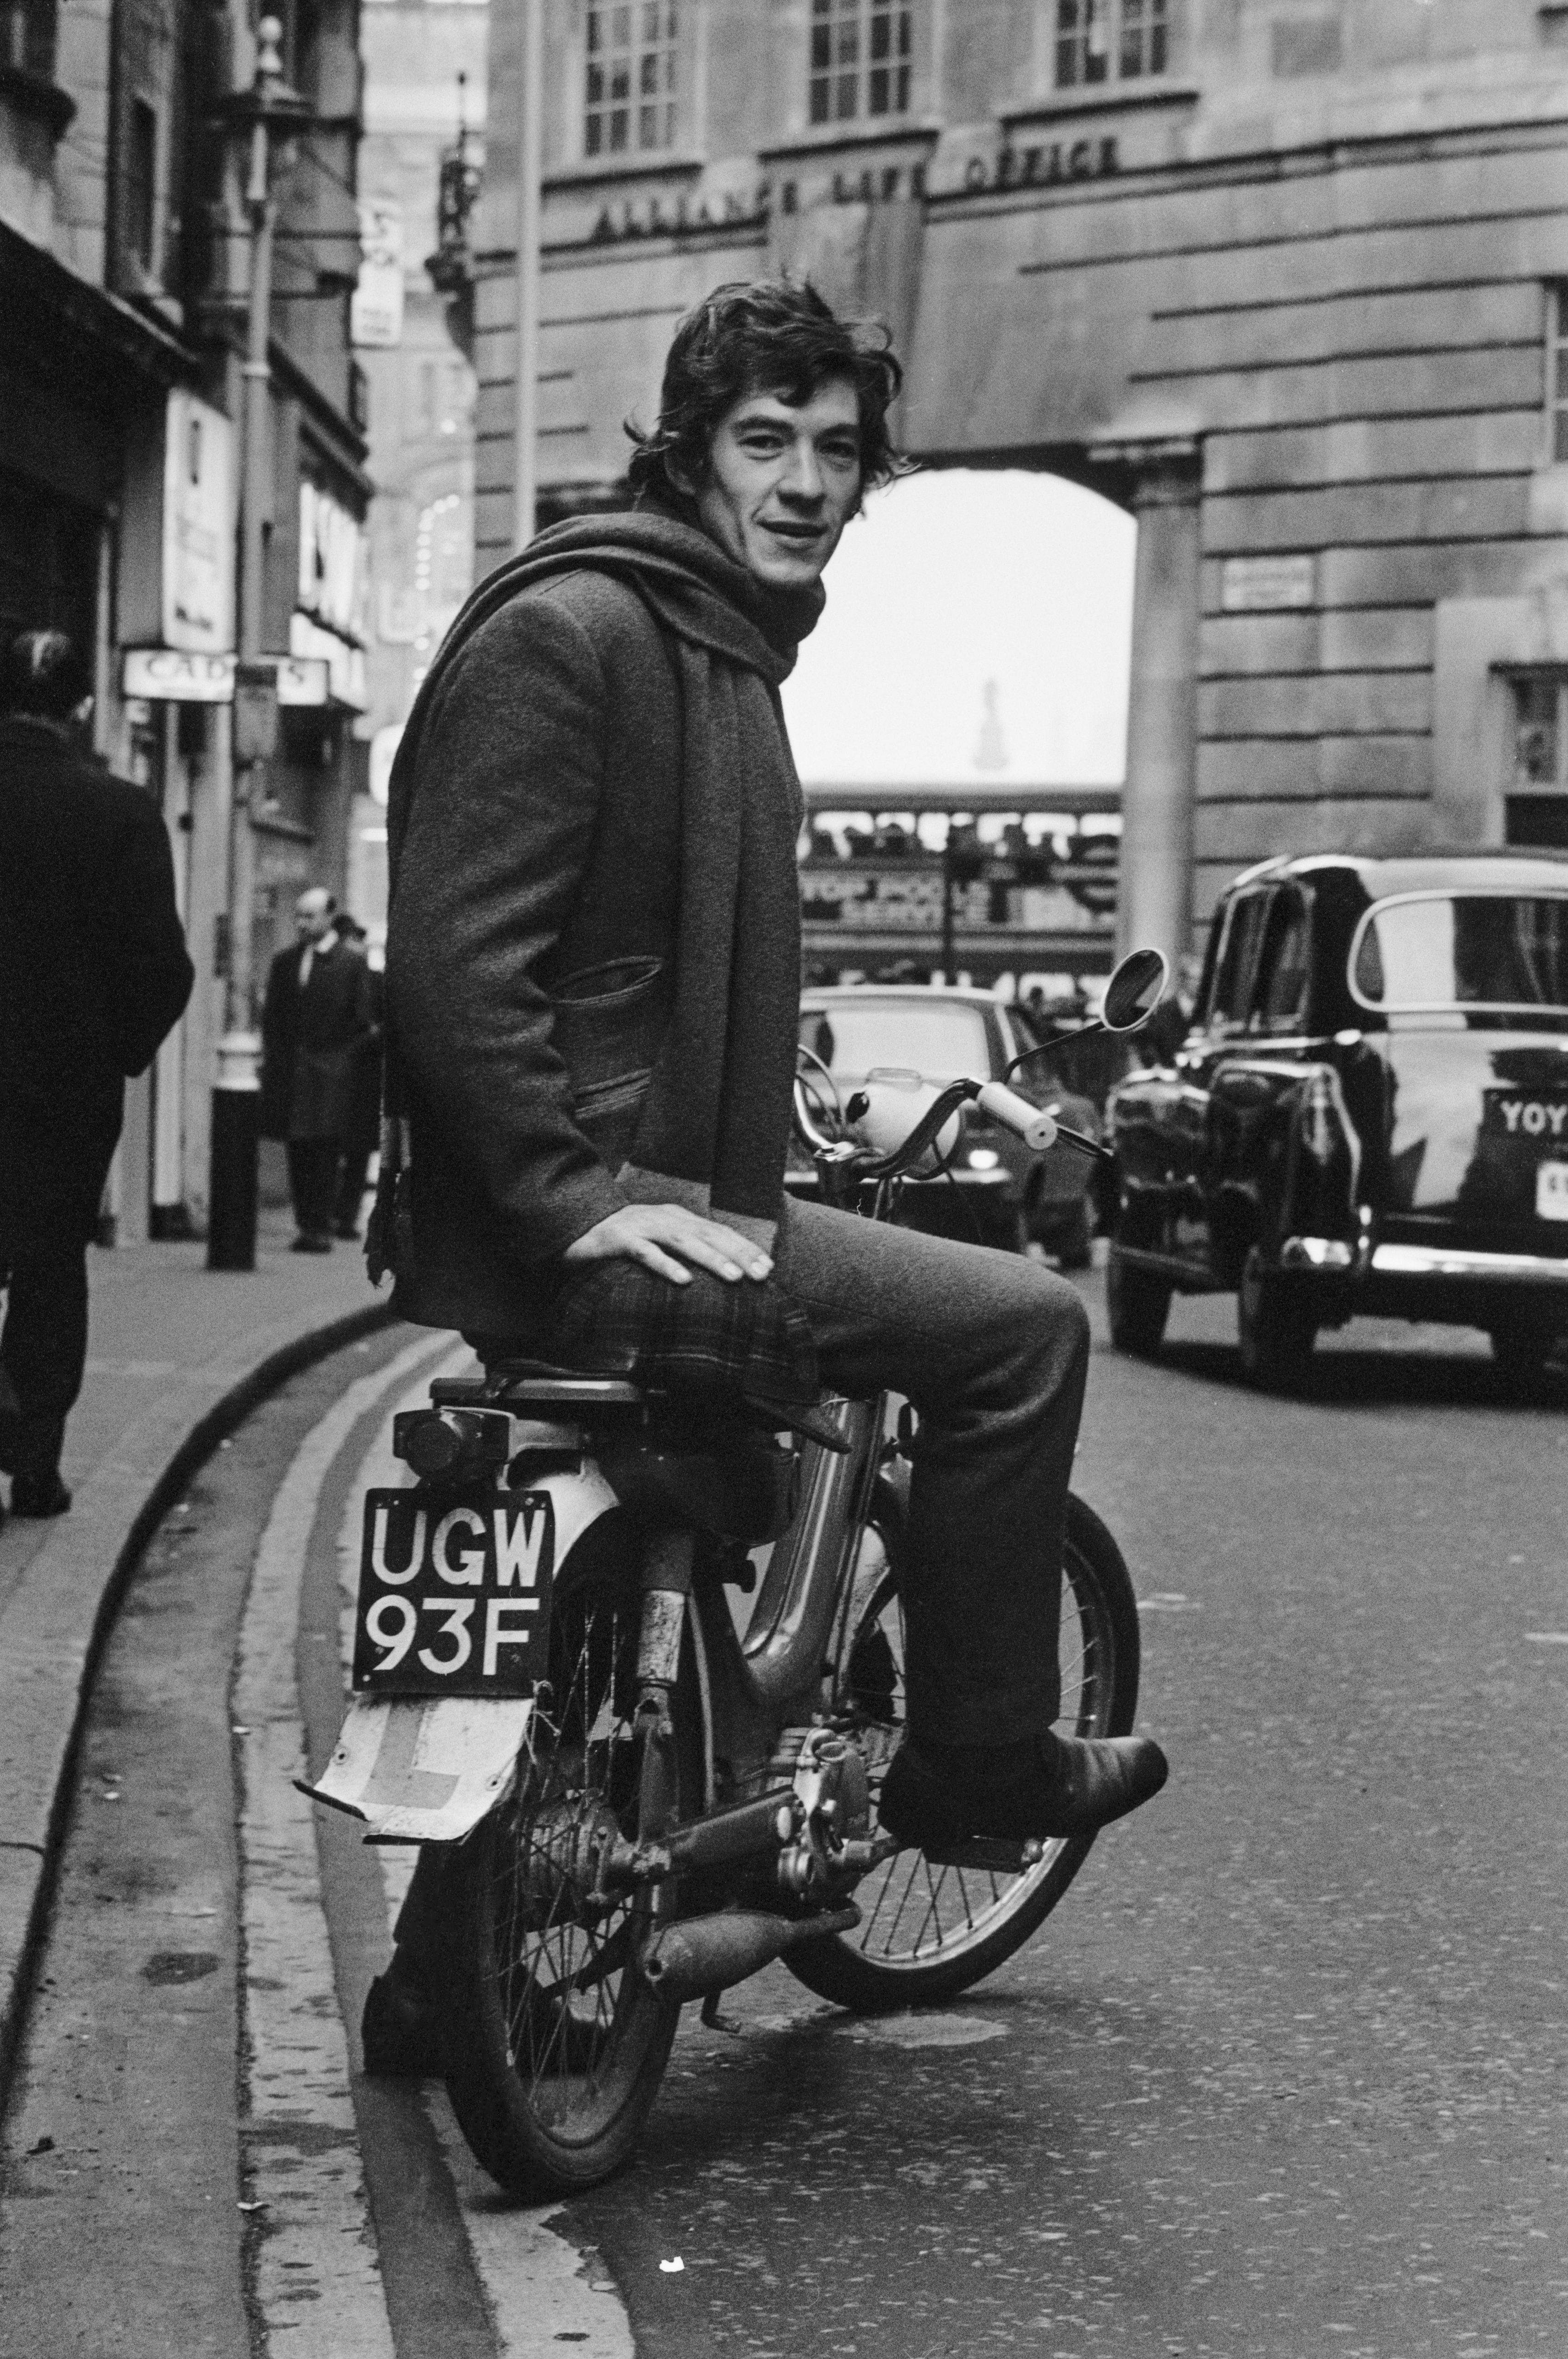 The British actor in 1970